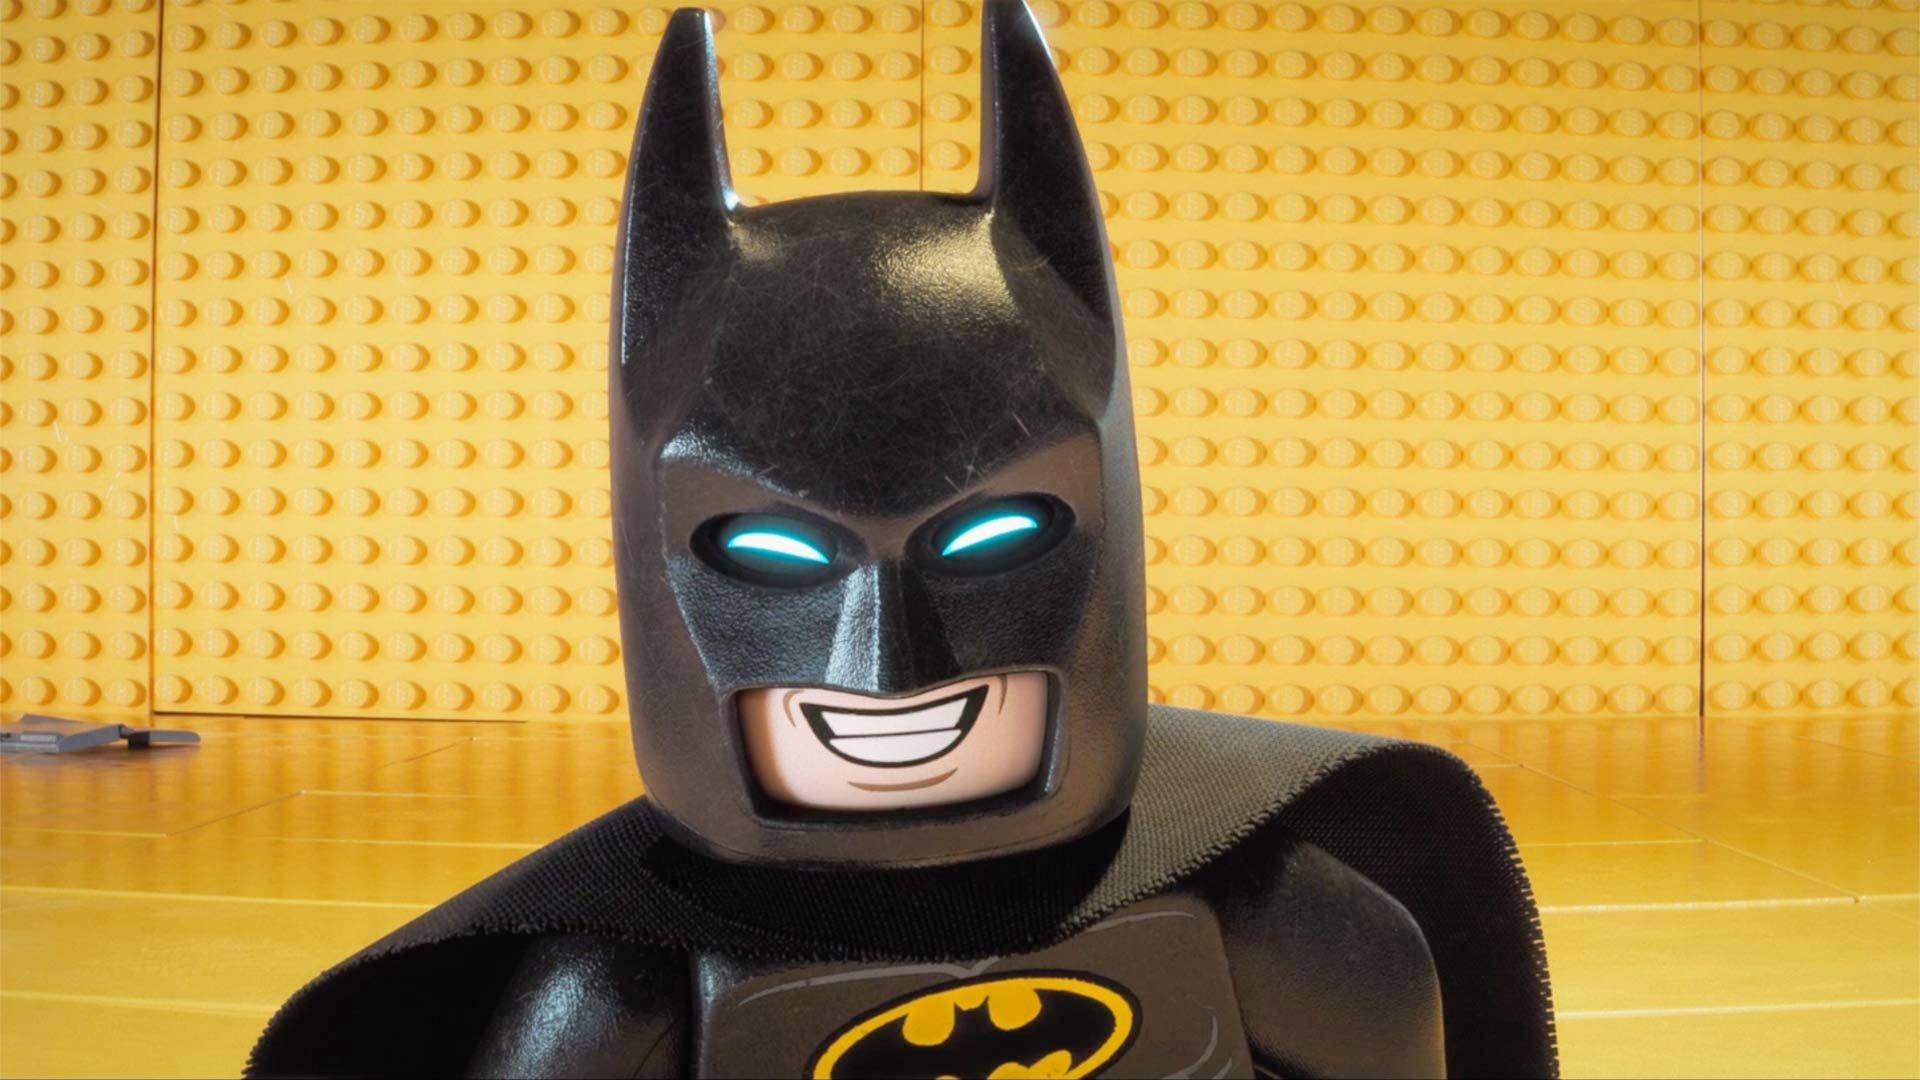 Lego Batman Movie, Animated gem, UC Irvine review, Fan-favourite Batman film, 1920x1080 Full HD Desktop